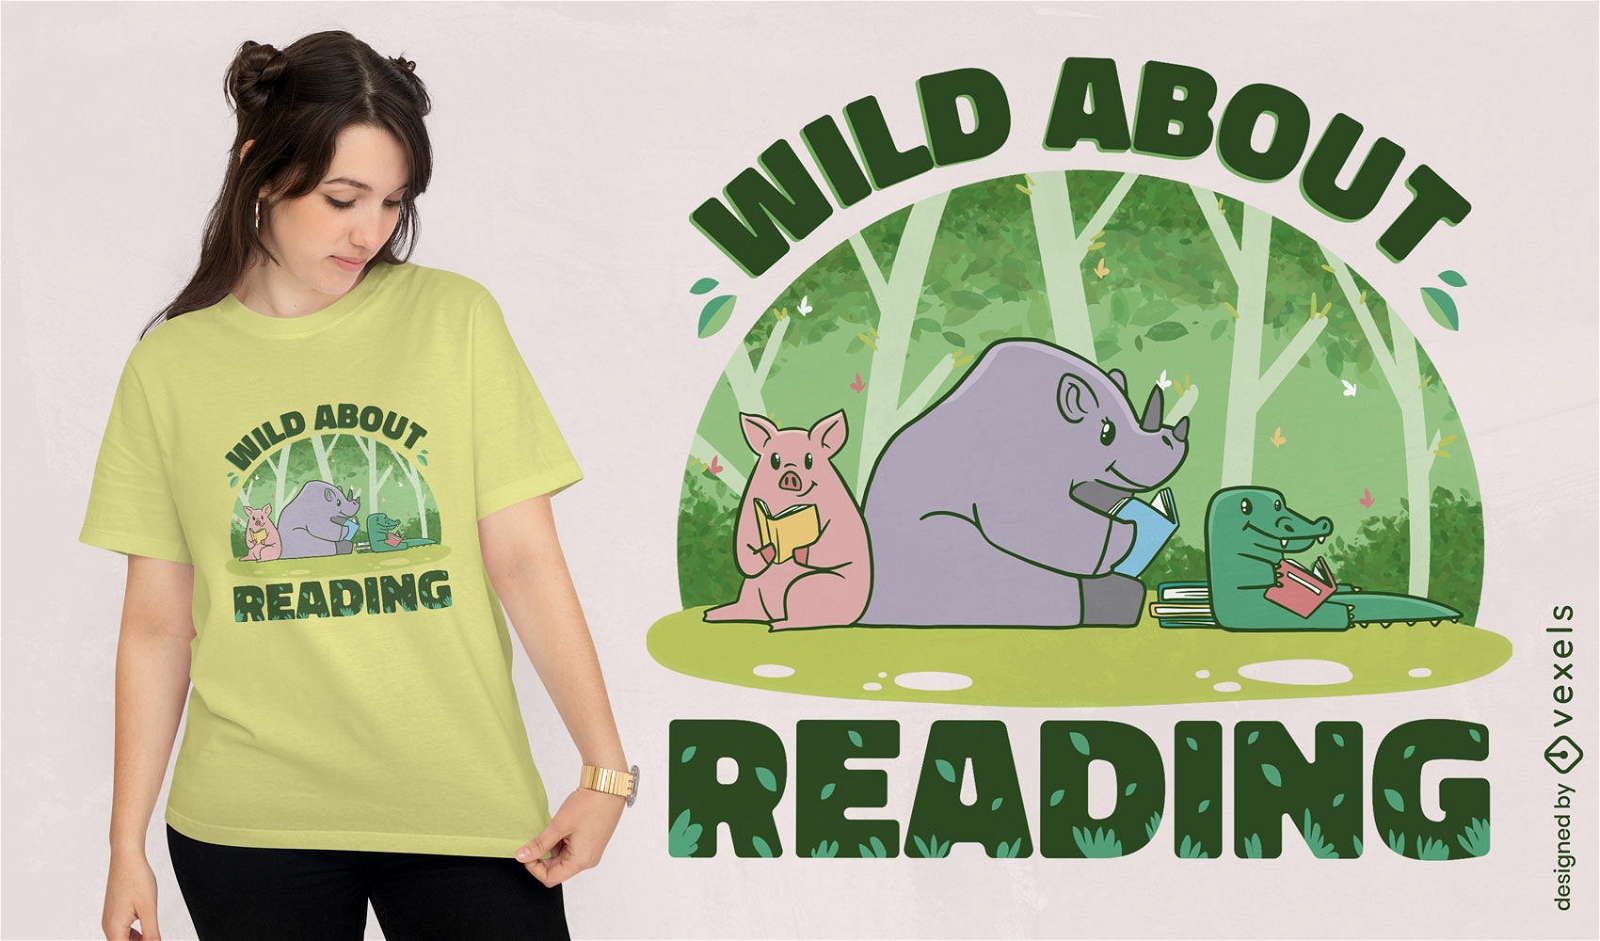 Dise?o de camiseta de libros de lectura de animales salvajes.